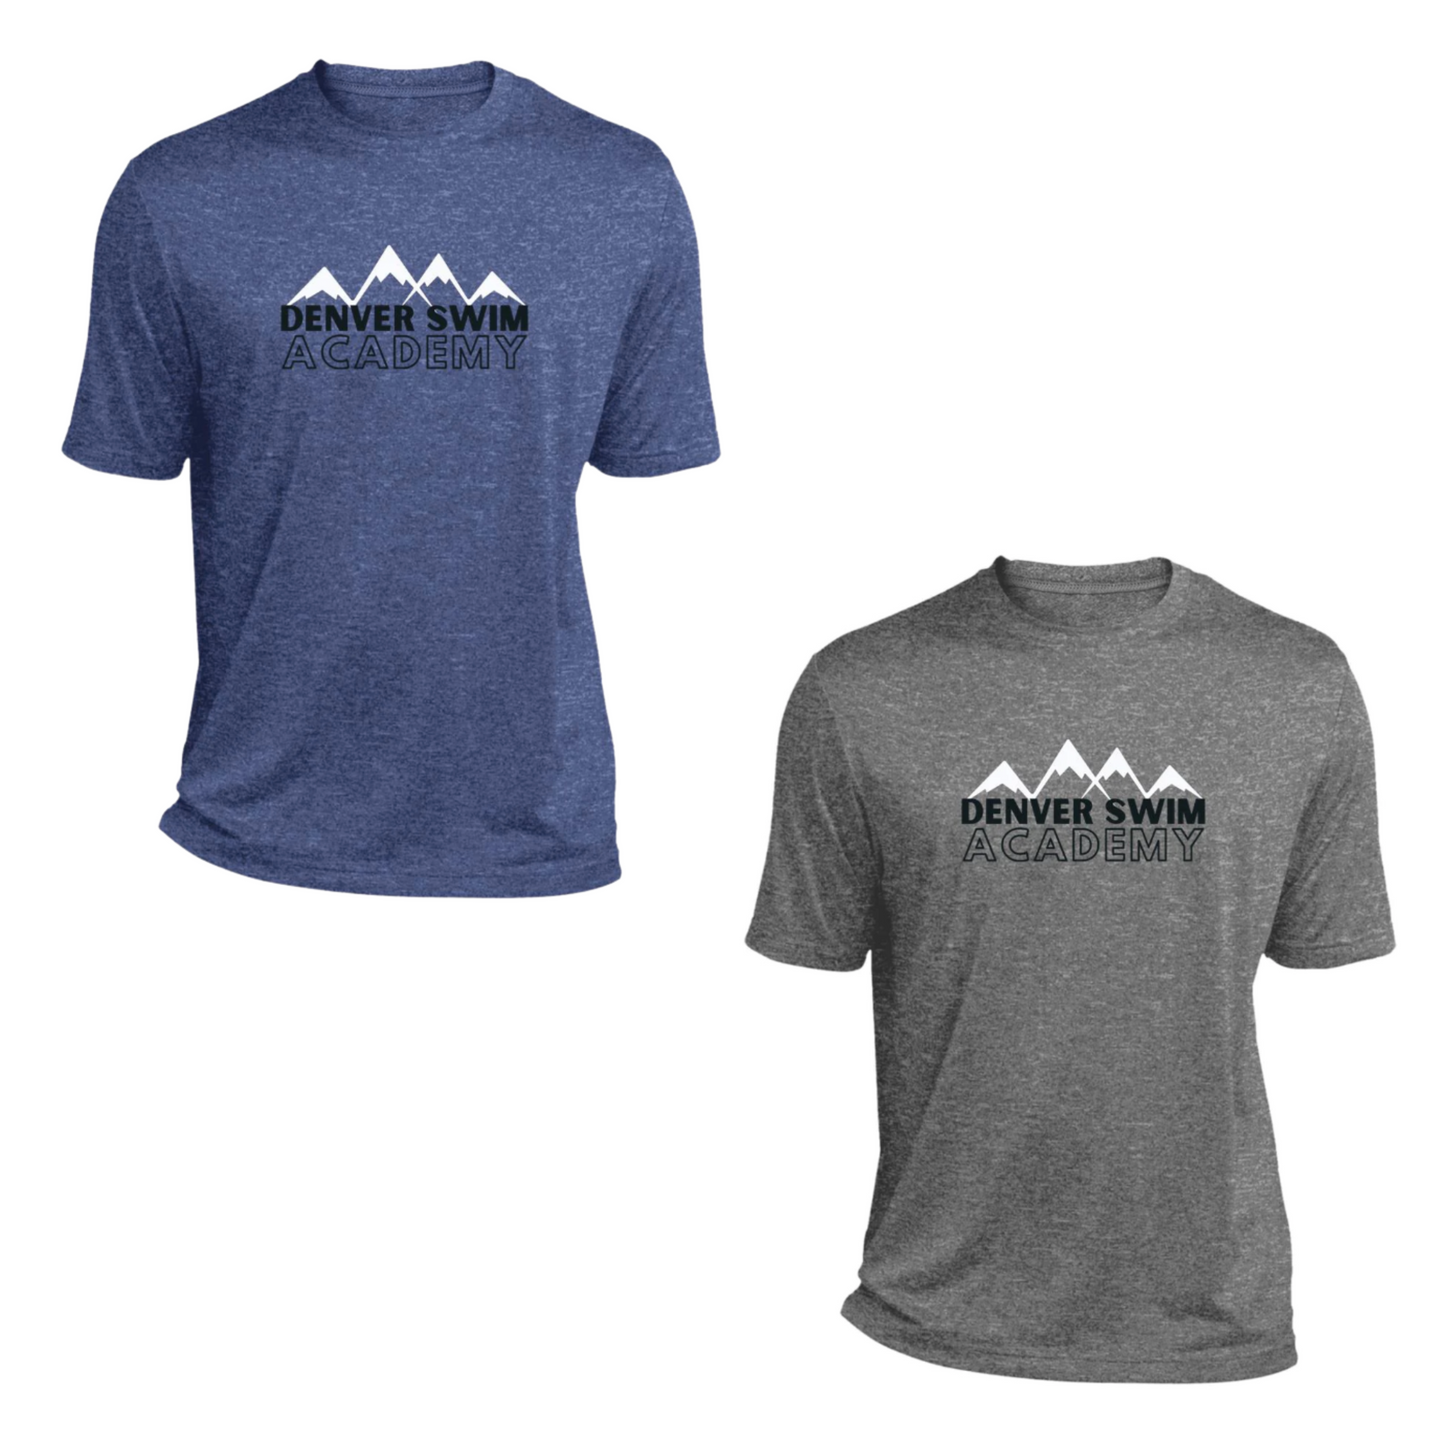 Denver Swim Academy Mountains- The Performance T-Shirt